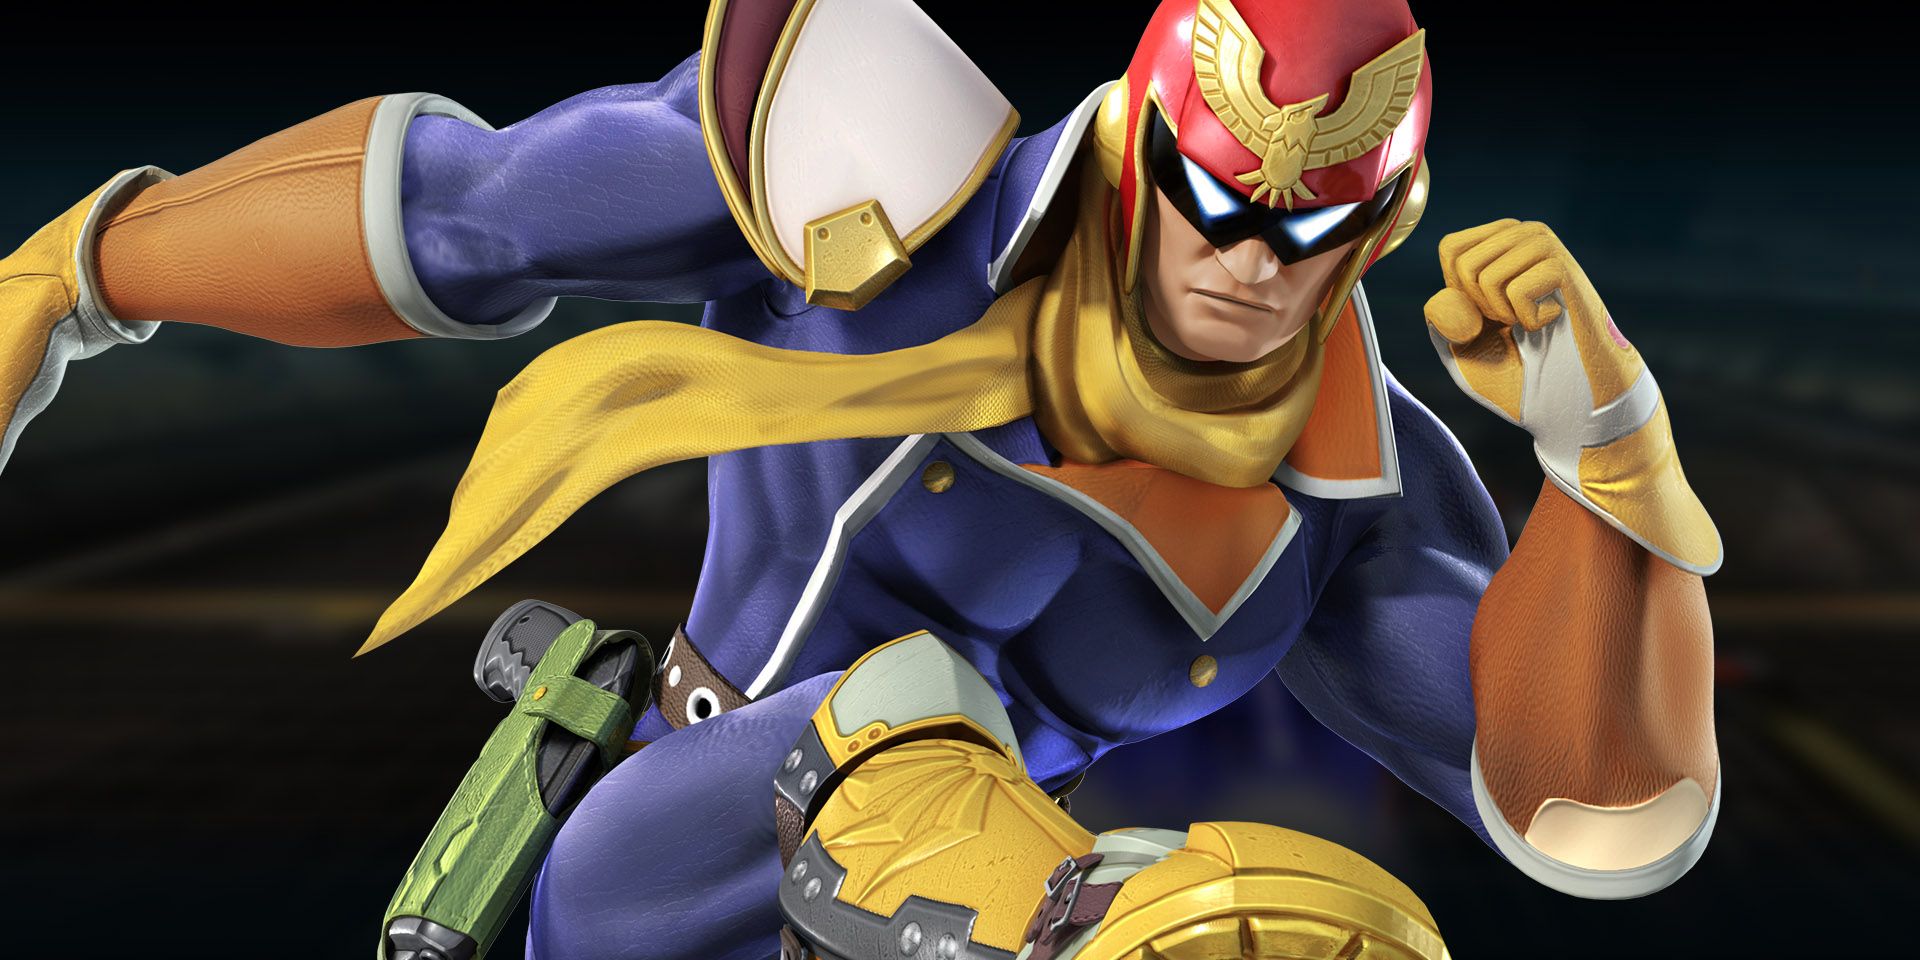 Captain Falcon from Super Smash Bros.